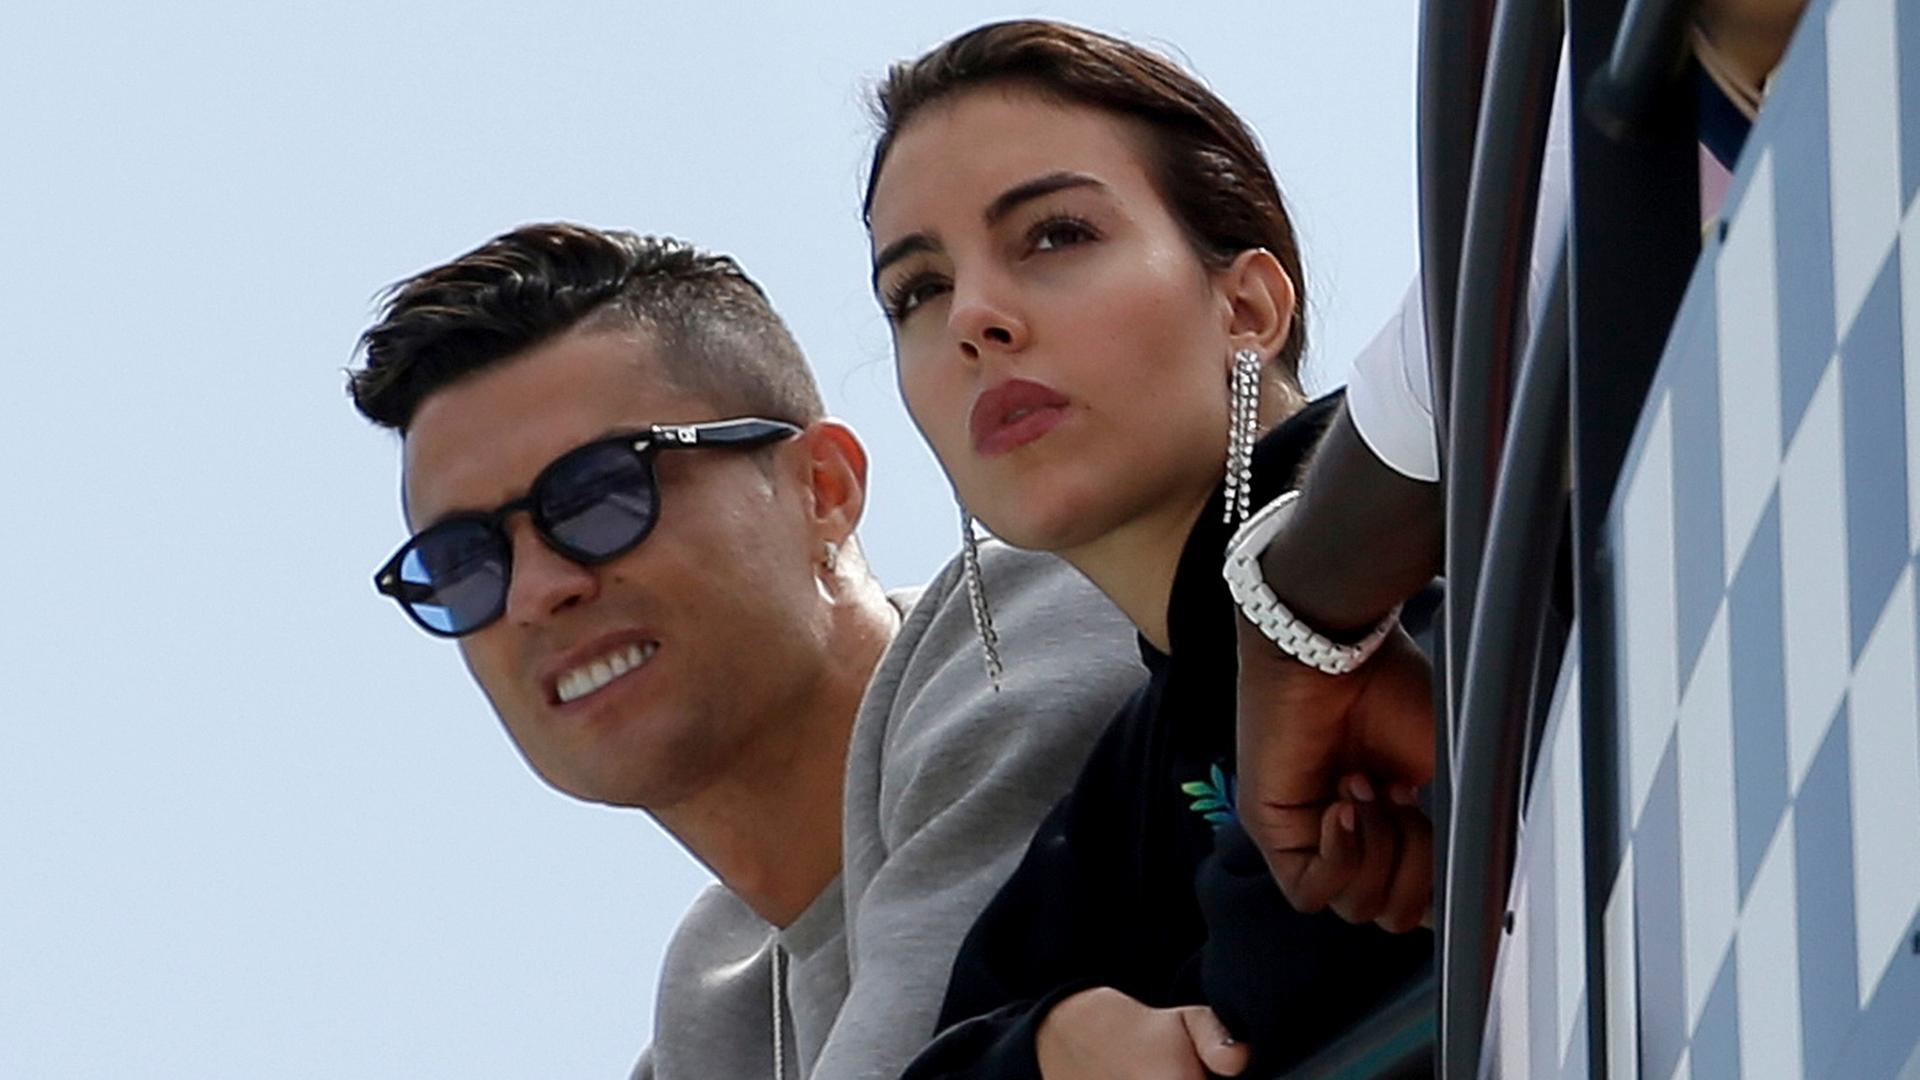 Fussballer Cristiano Ronaldo und Georgina Rodriguez